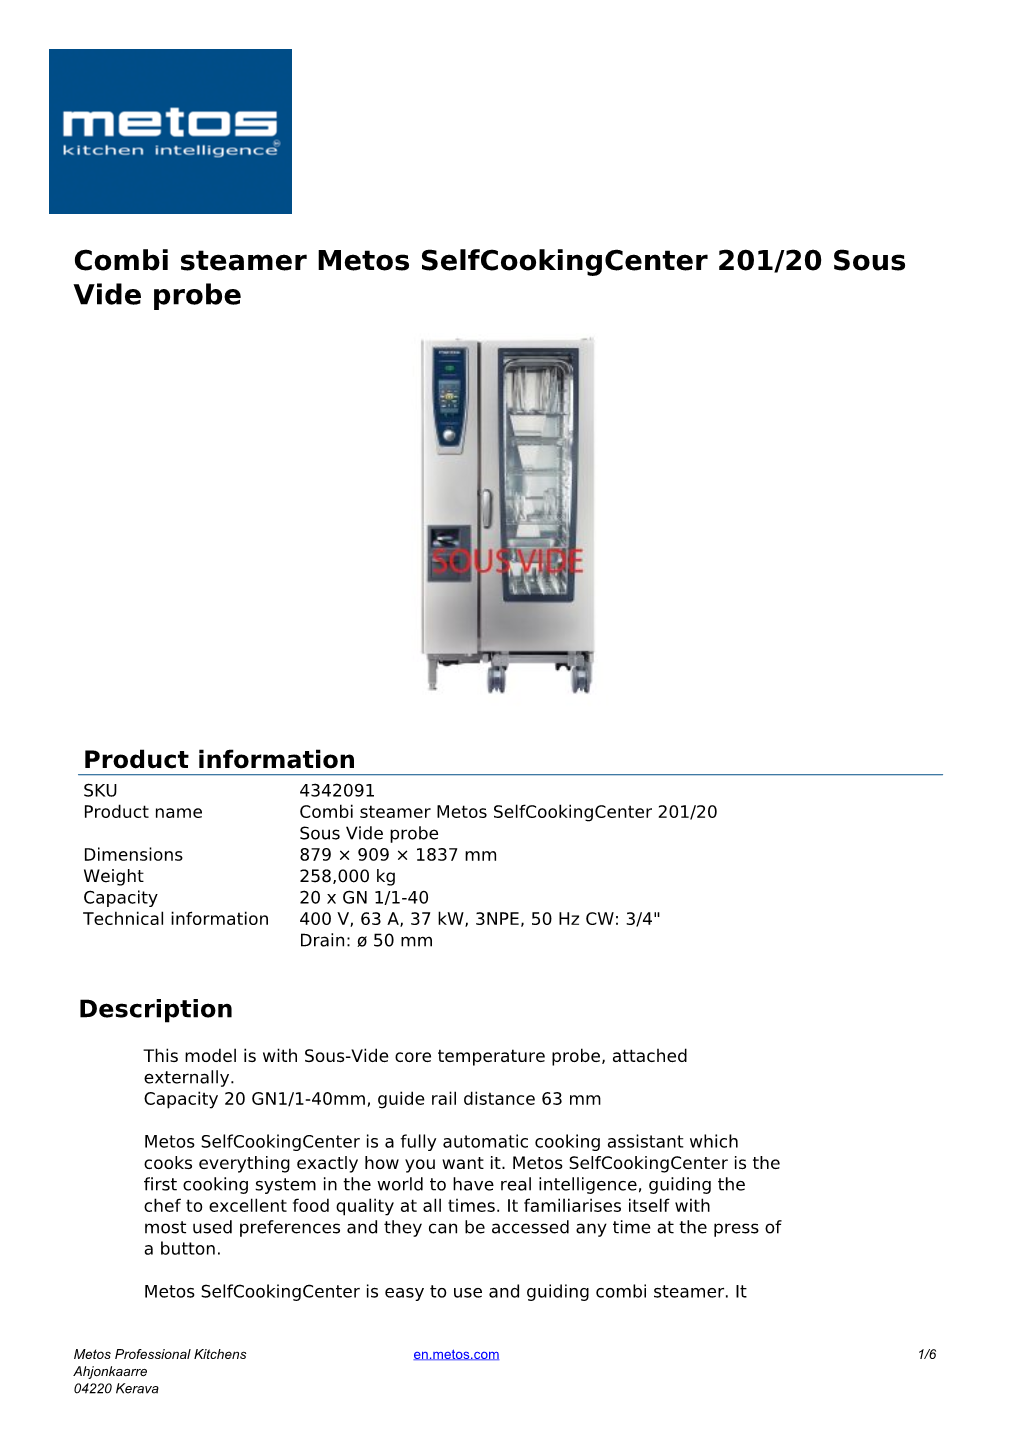 Combi Steamer Metos Selfcookingcenter 201/20 Sous Vide Probe